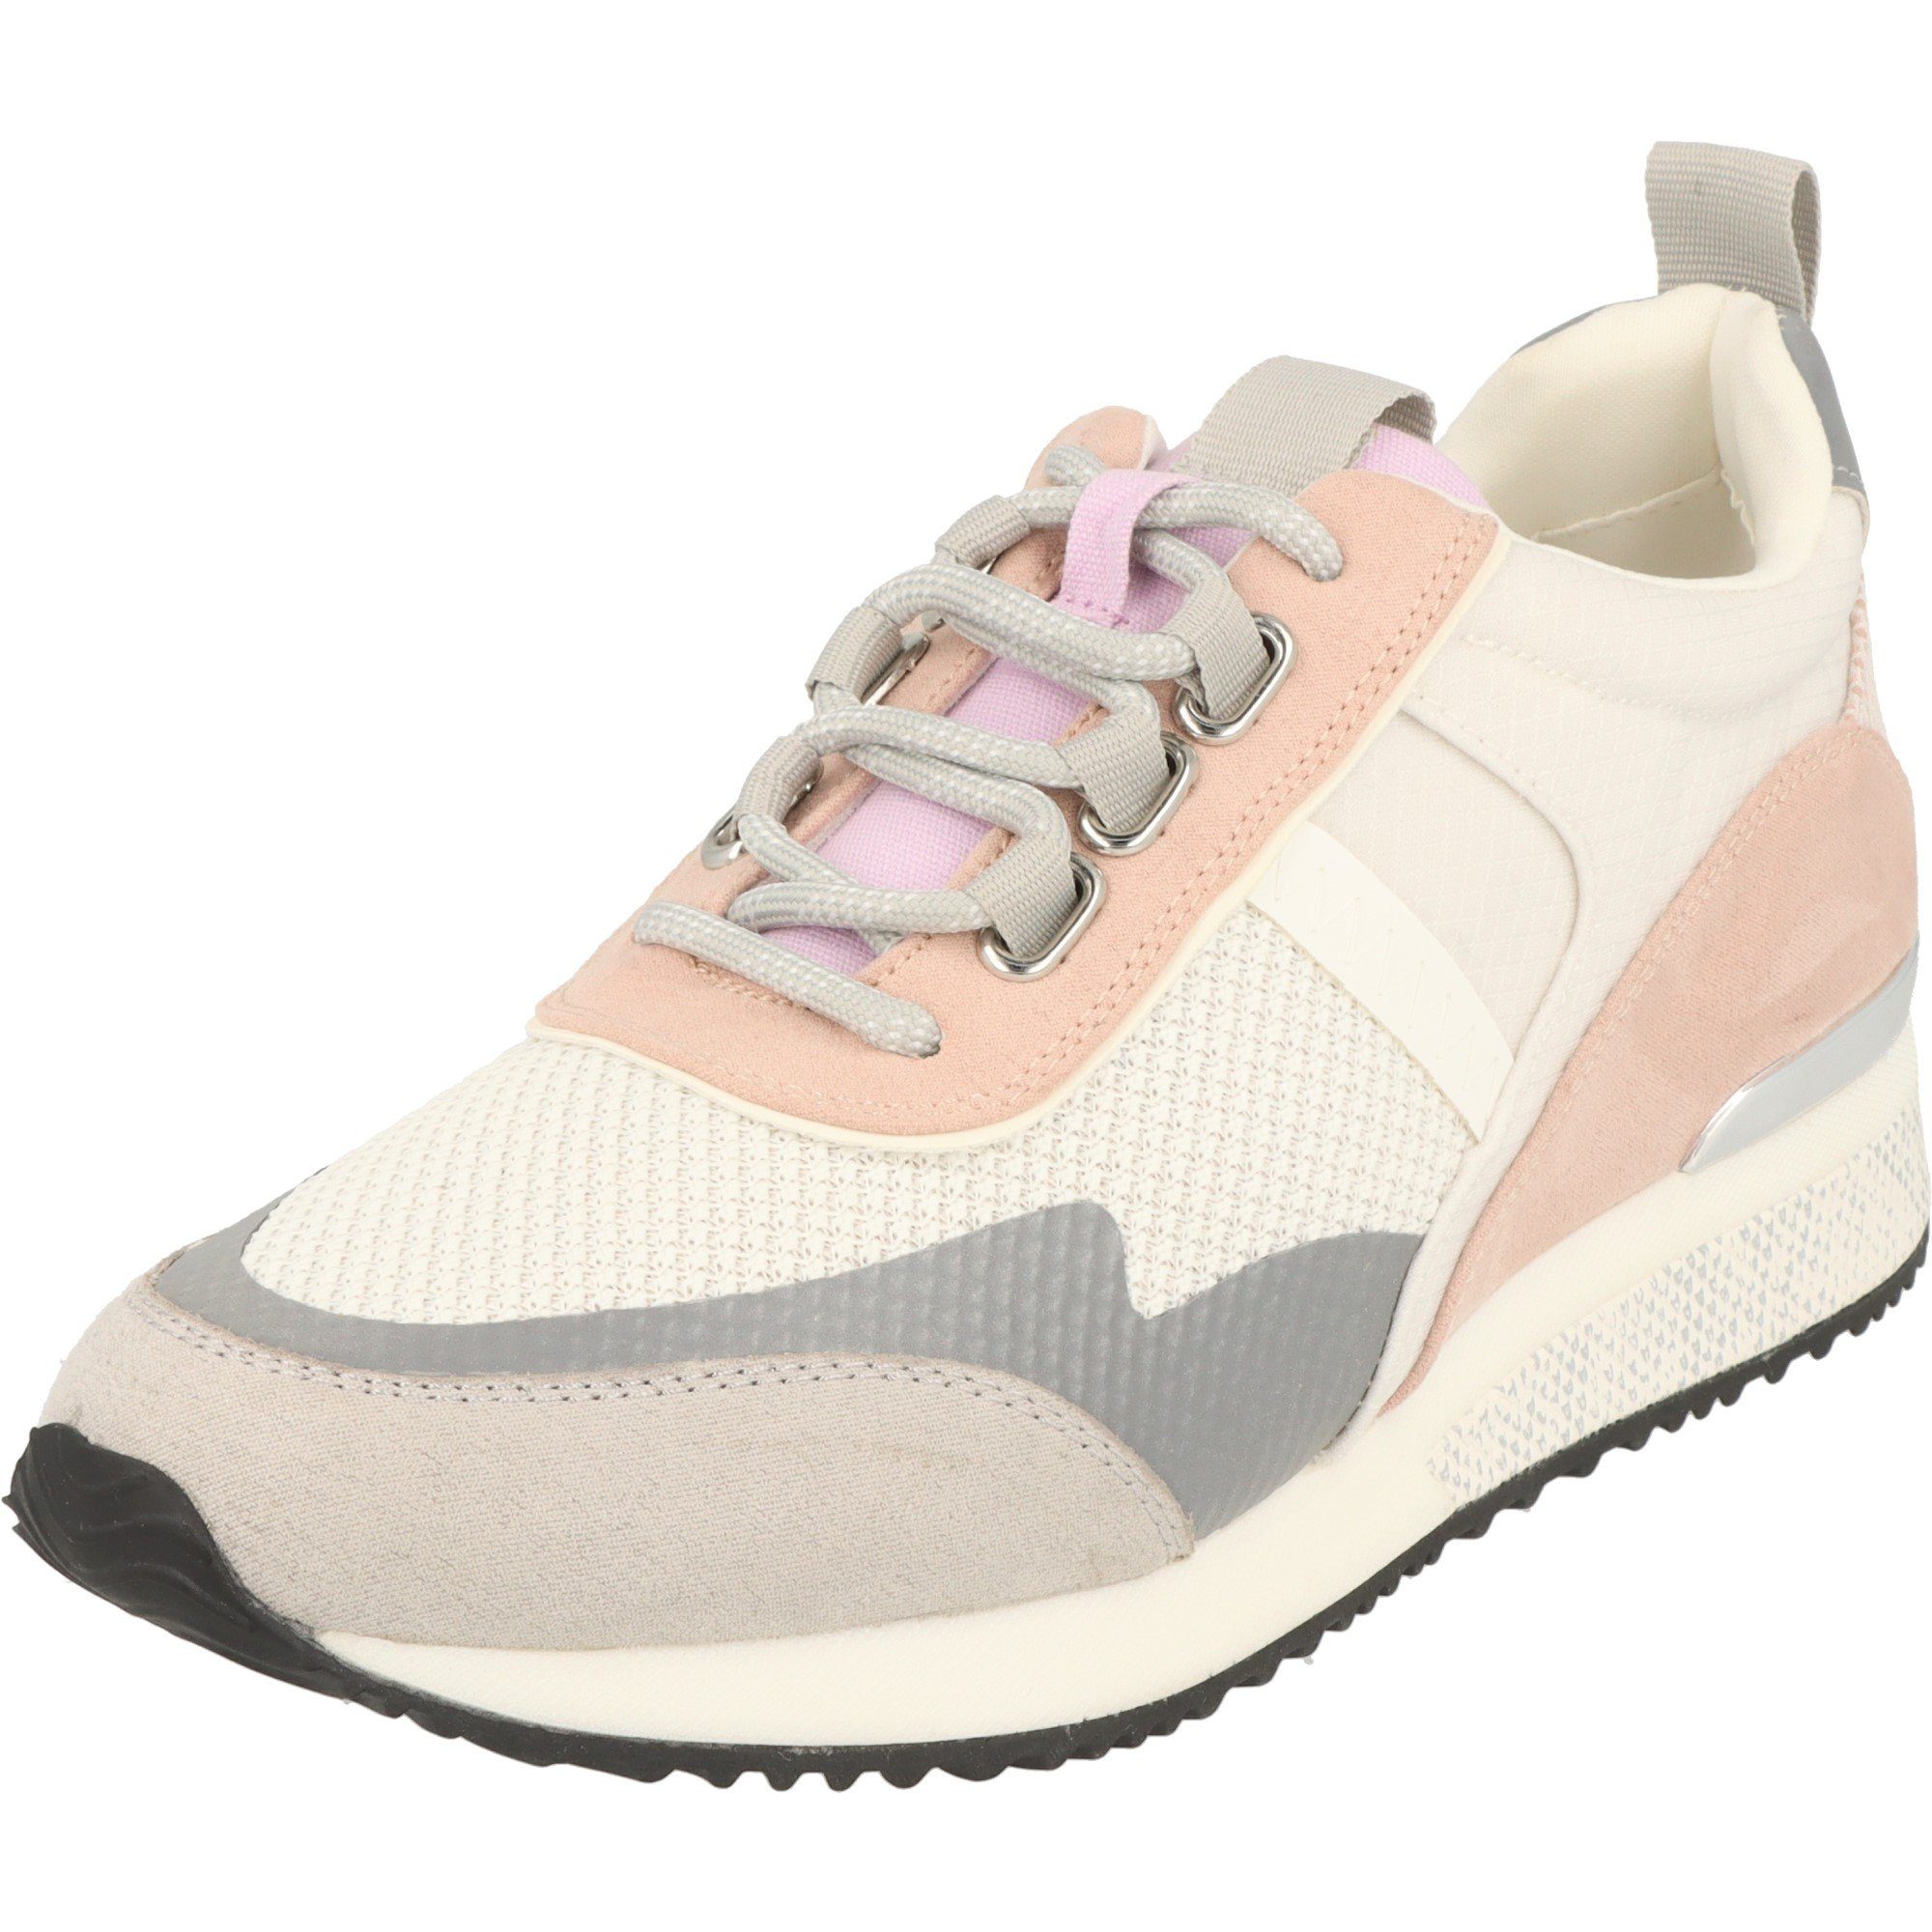 La Strada Damen Schuhe Halbschuhe 2003156-1002 Lt.Grey-Pink Multi Sneaker Grau